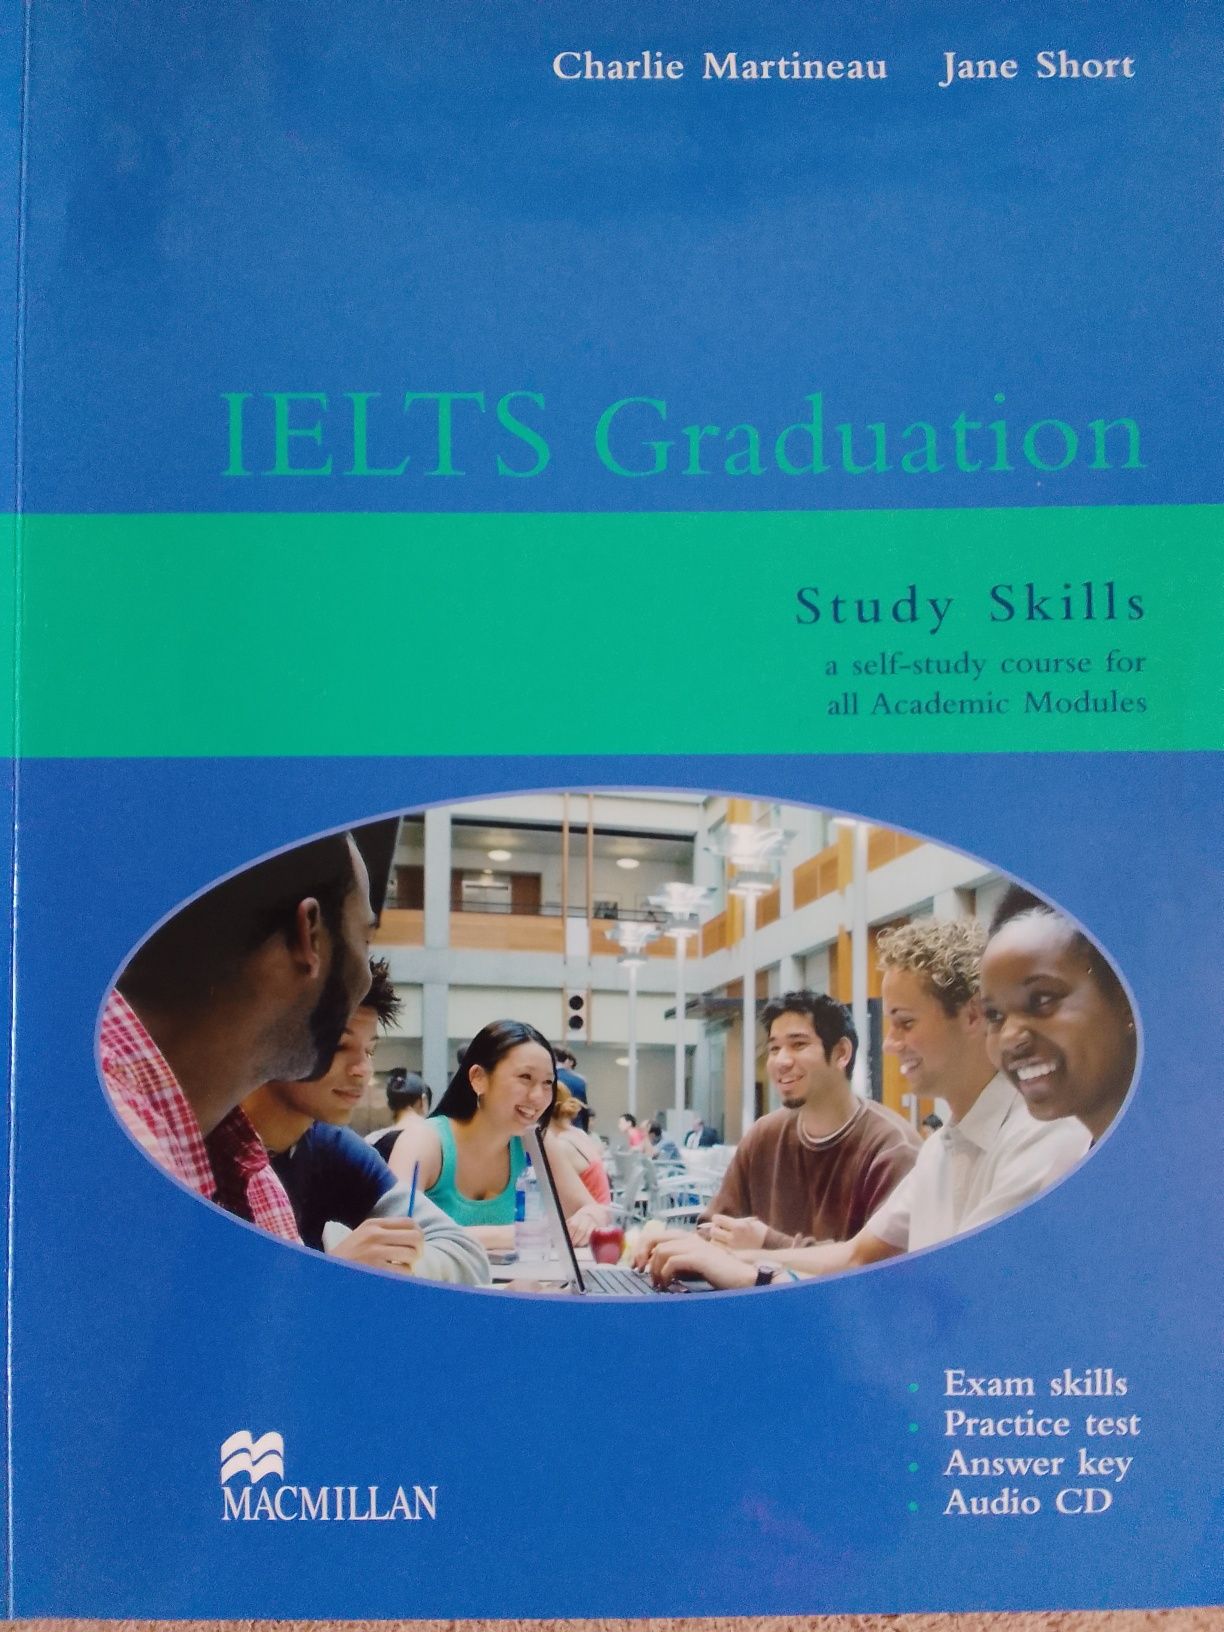 Charlie Martineau, Jane Short "IELTS Graduation Study Skills"